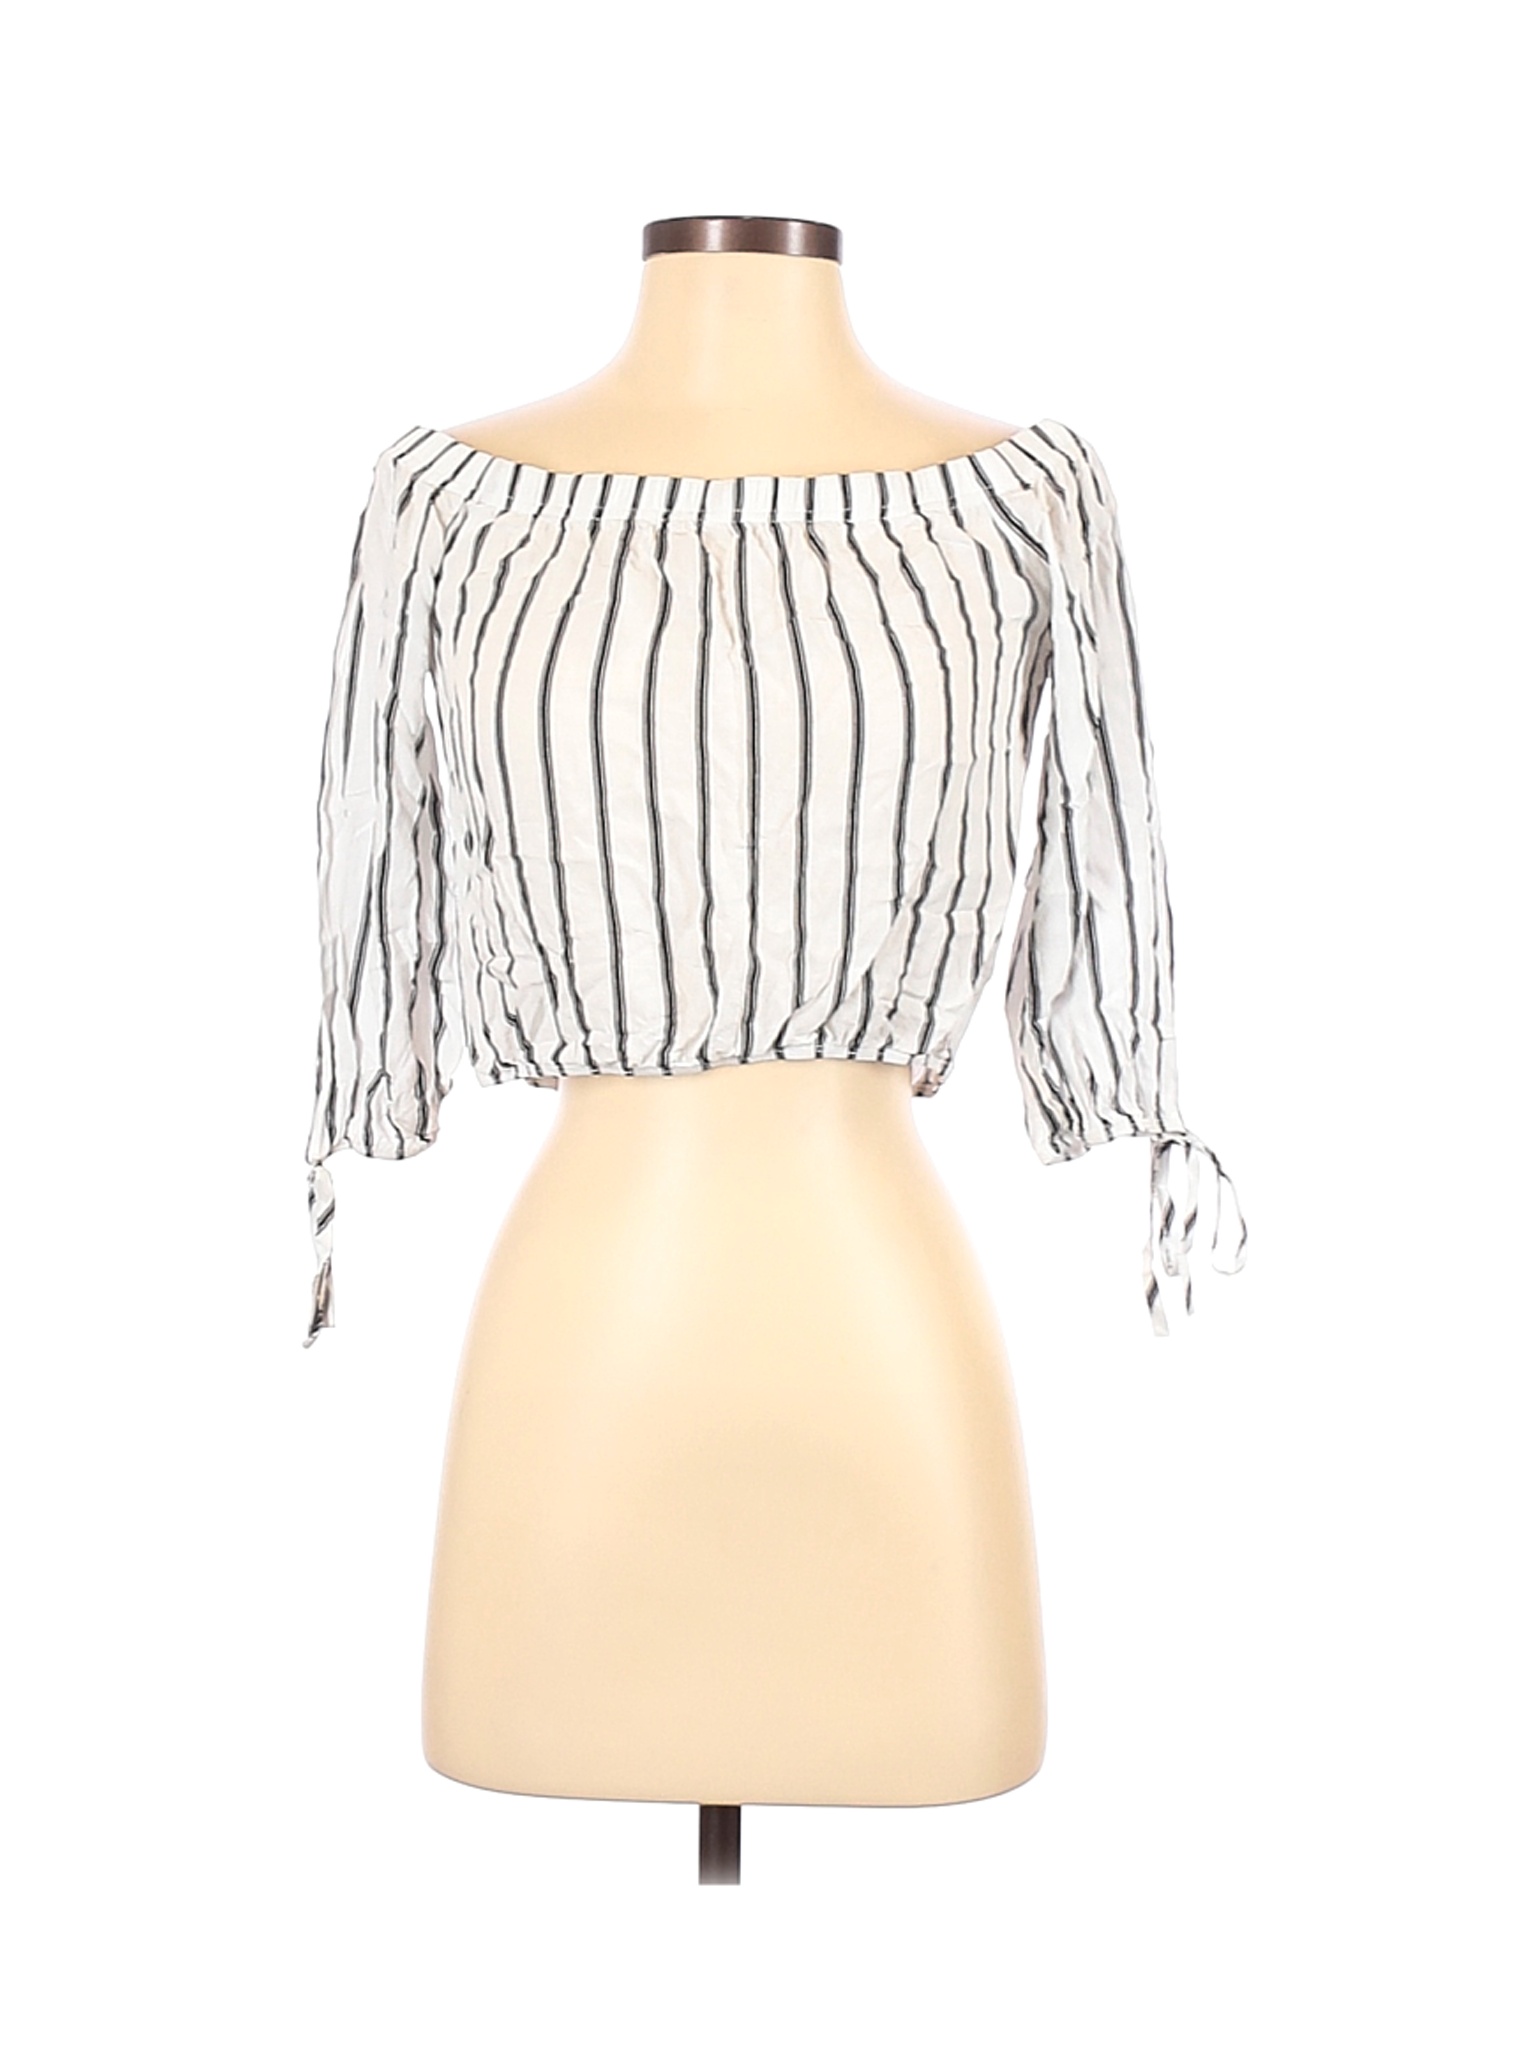 LA Hearts Women White Short Sleeve Blouse S | eBay